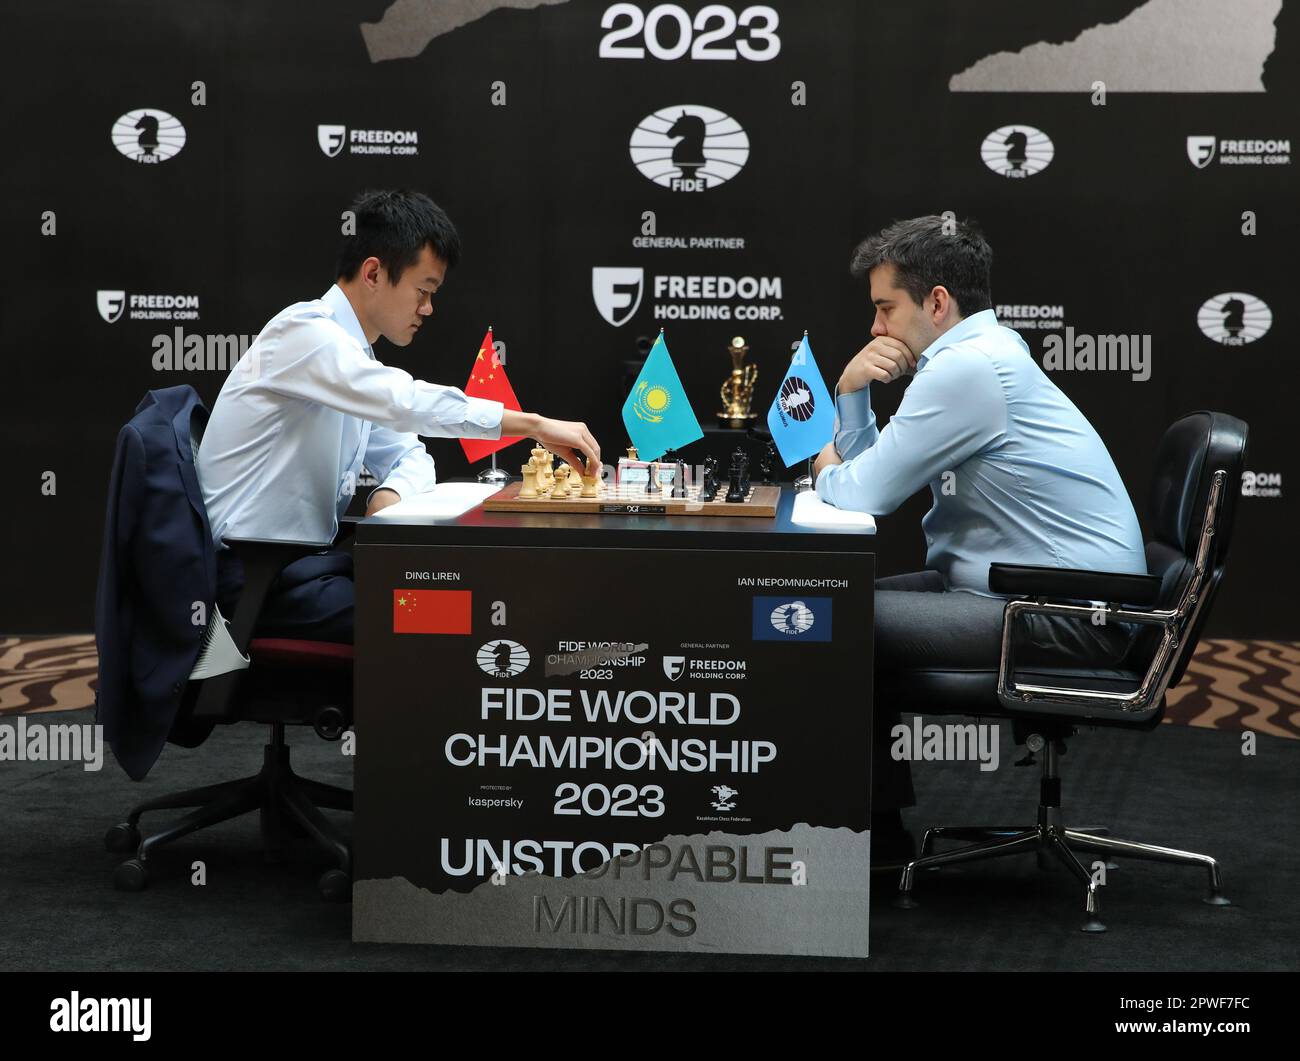 FIDE World Rapid and Blitz Chess Championship 2023 starts in Kazakhstan –  European Chess Union